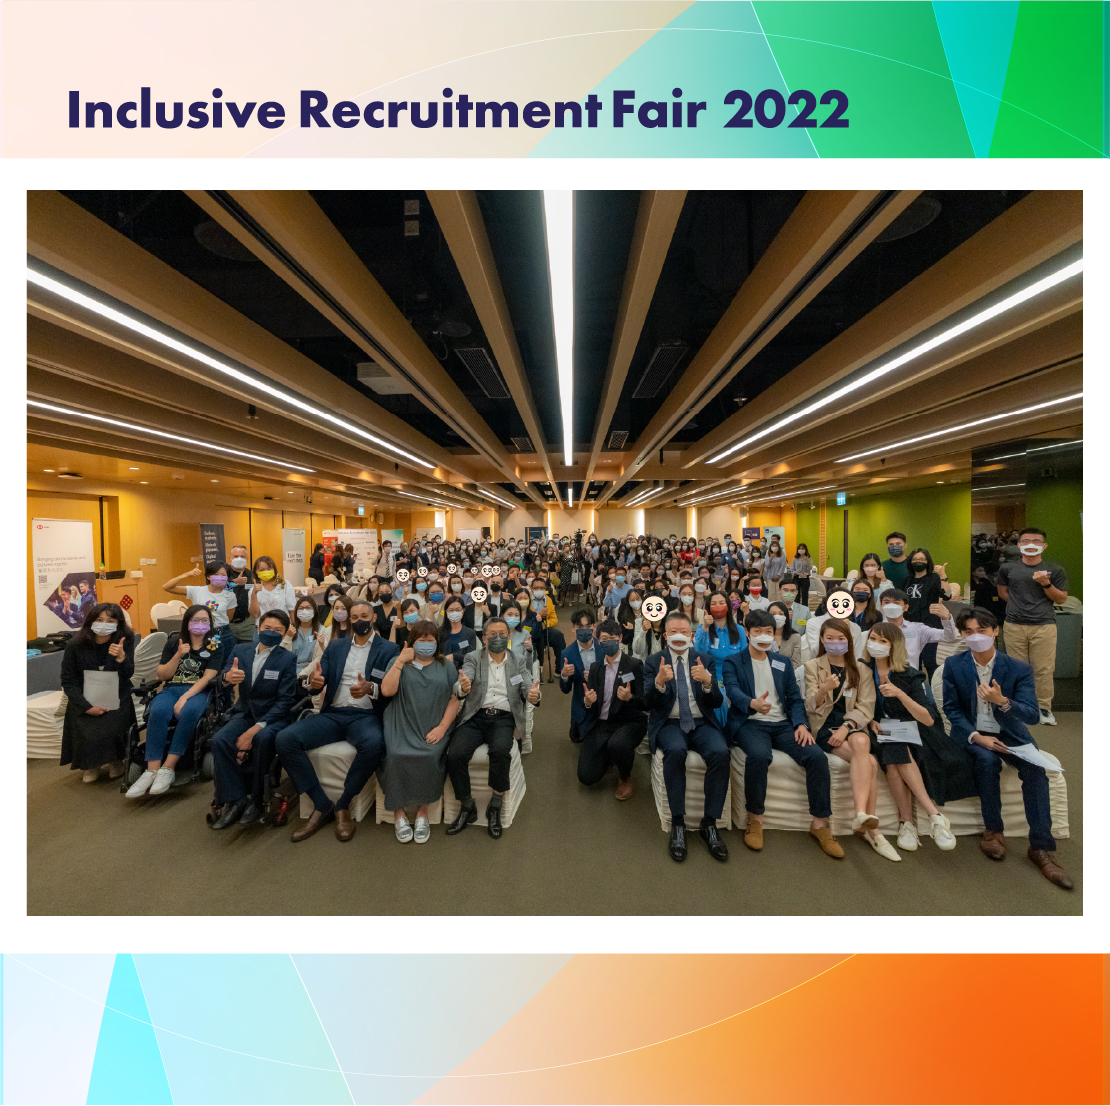 A group photo of Inclusive Recruitment Fair 2022.